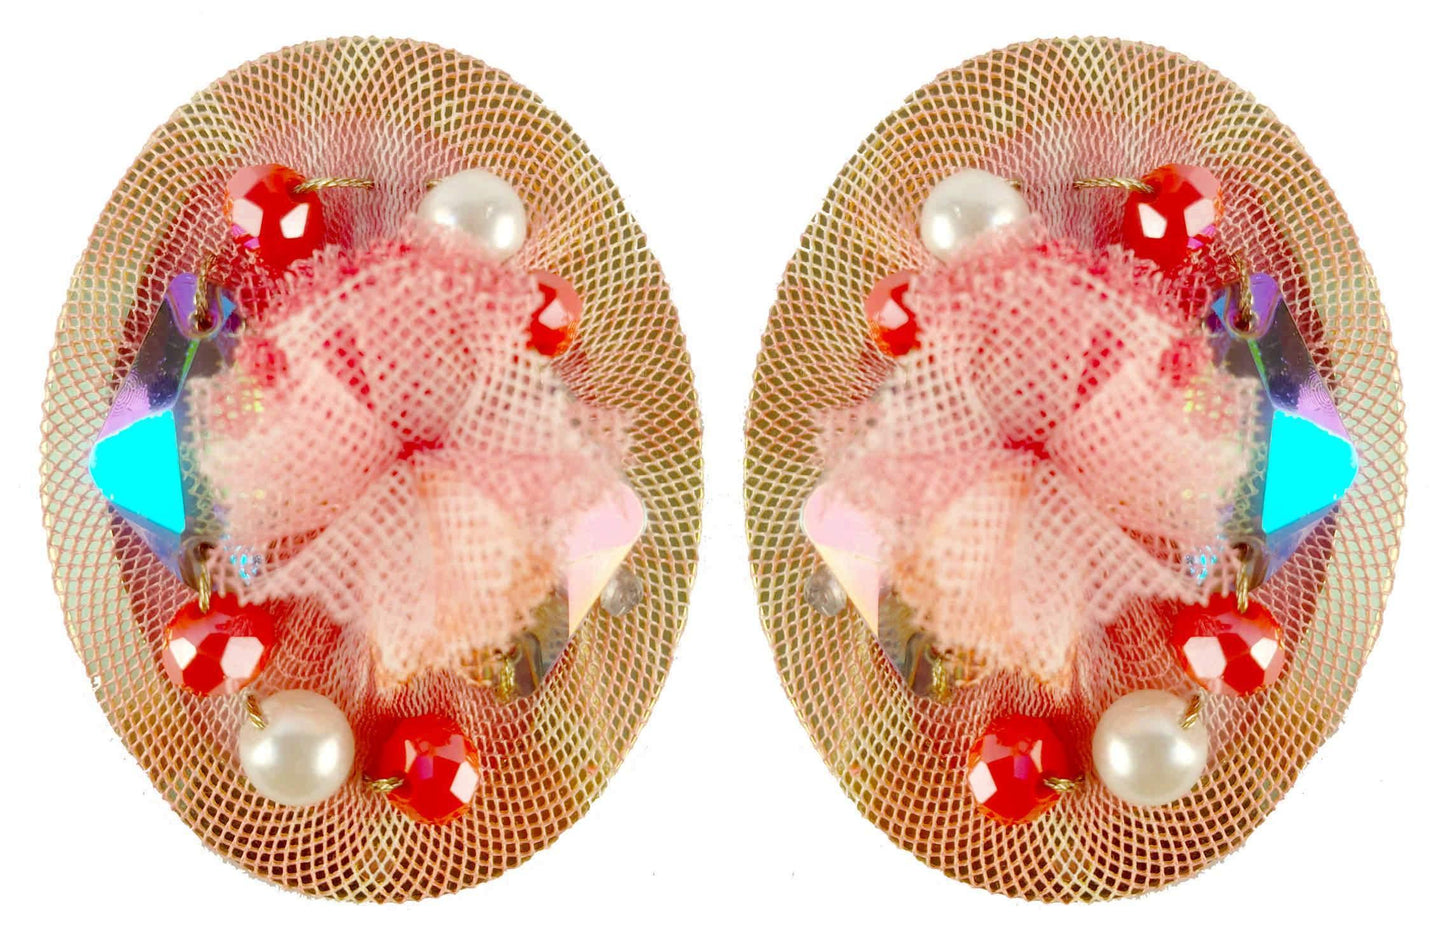 Rhinestones on Printed Net Design Artificial Fashion Dangler Earrings Jhumka for Girls Women, Oval, Pink